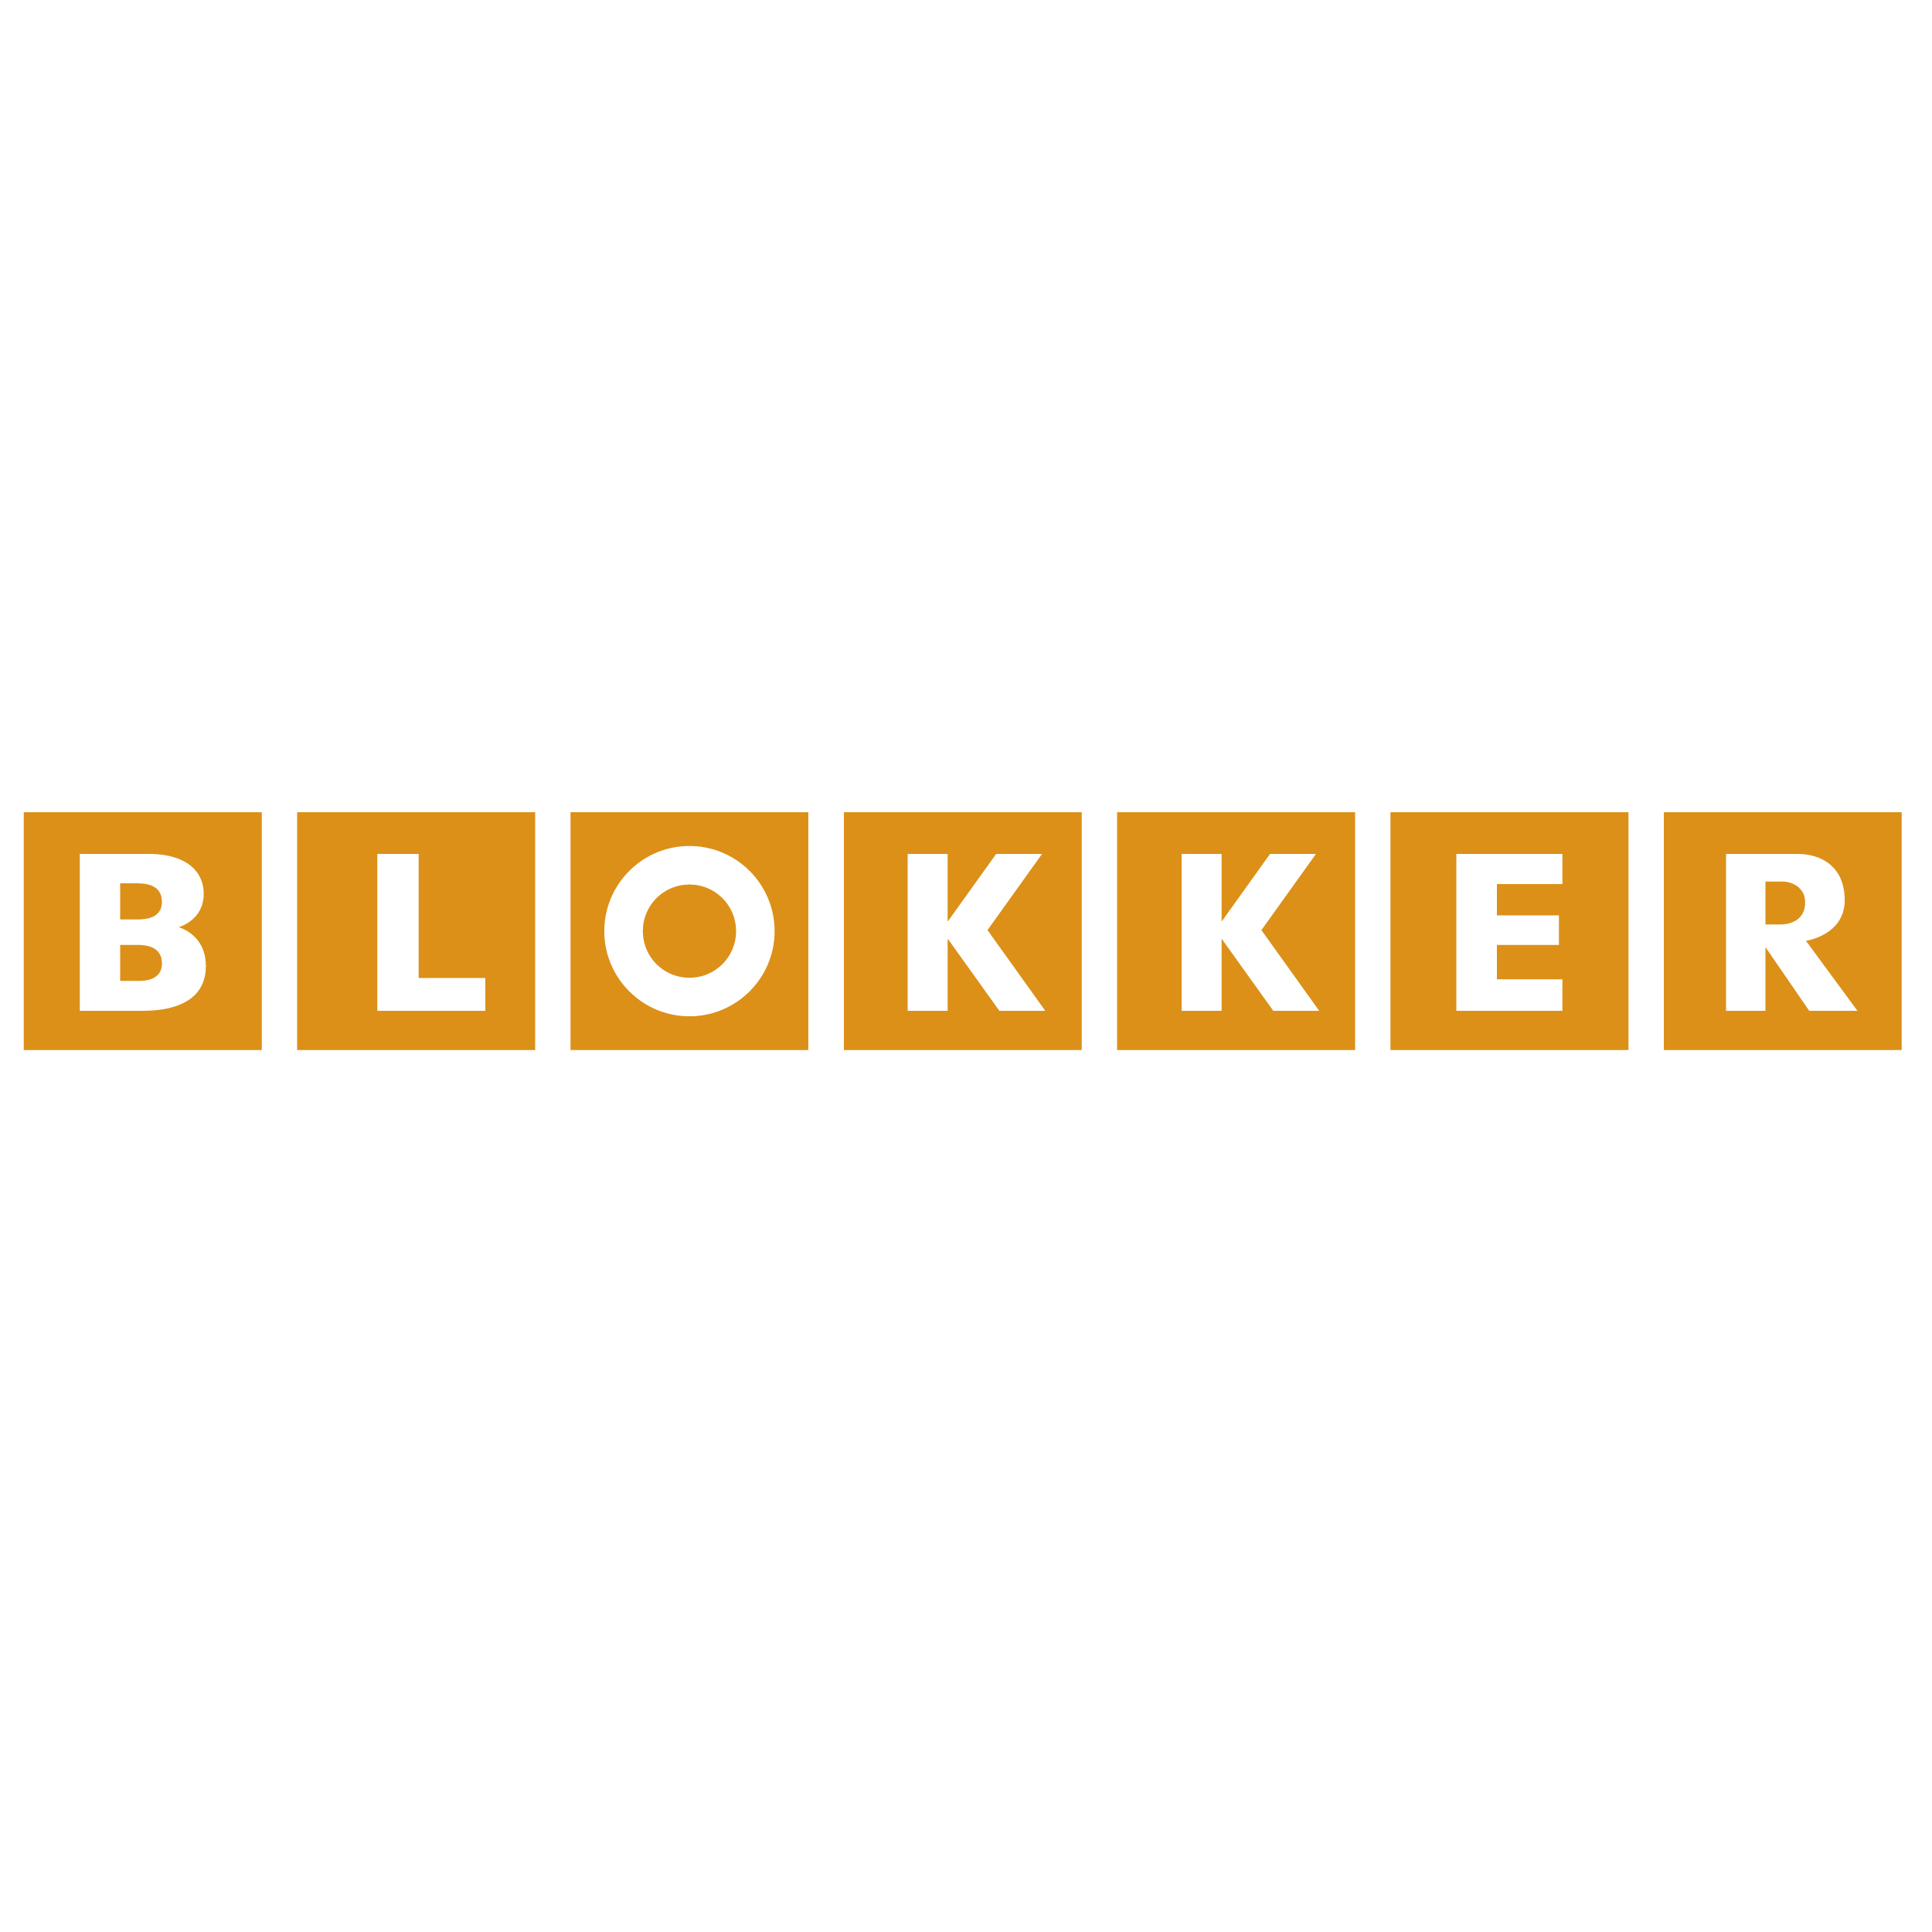 Blokker Logo photo - 1